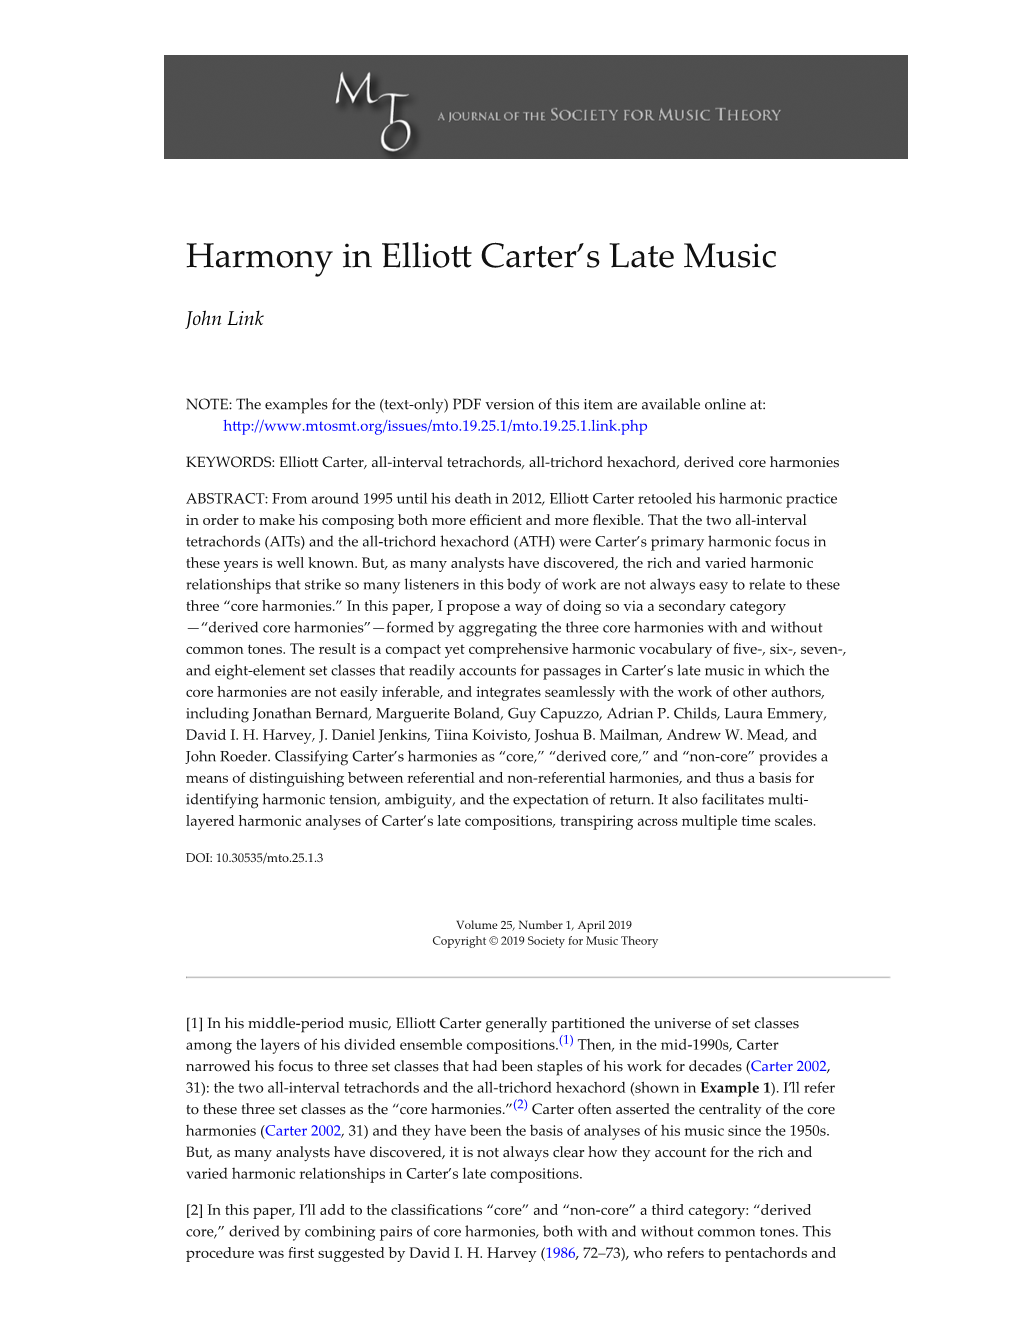 Harmony in Ellio Carter's Late Music